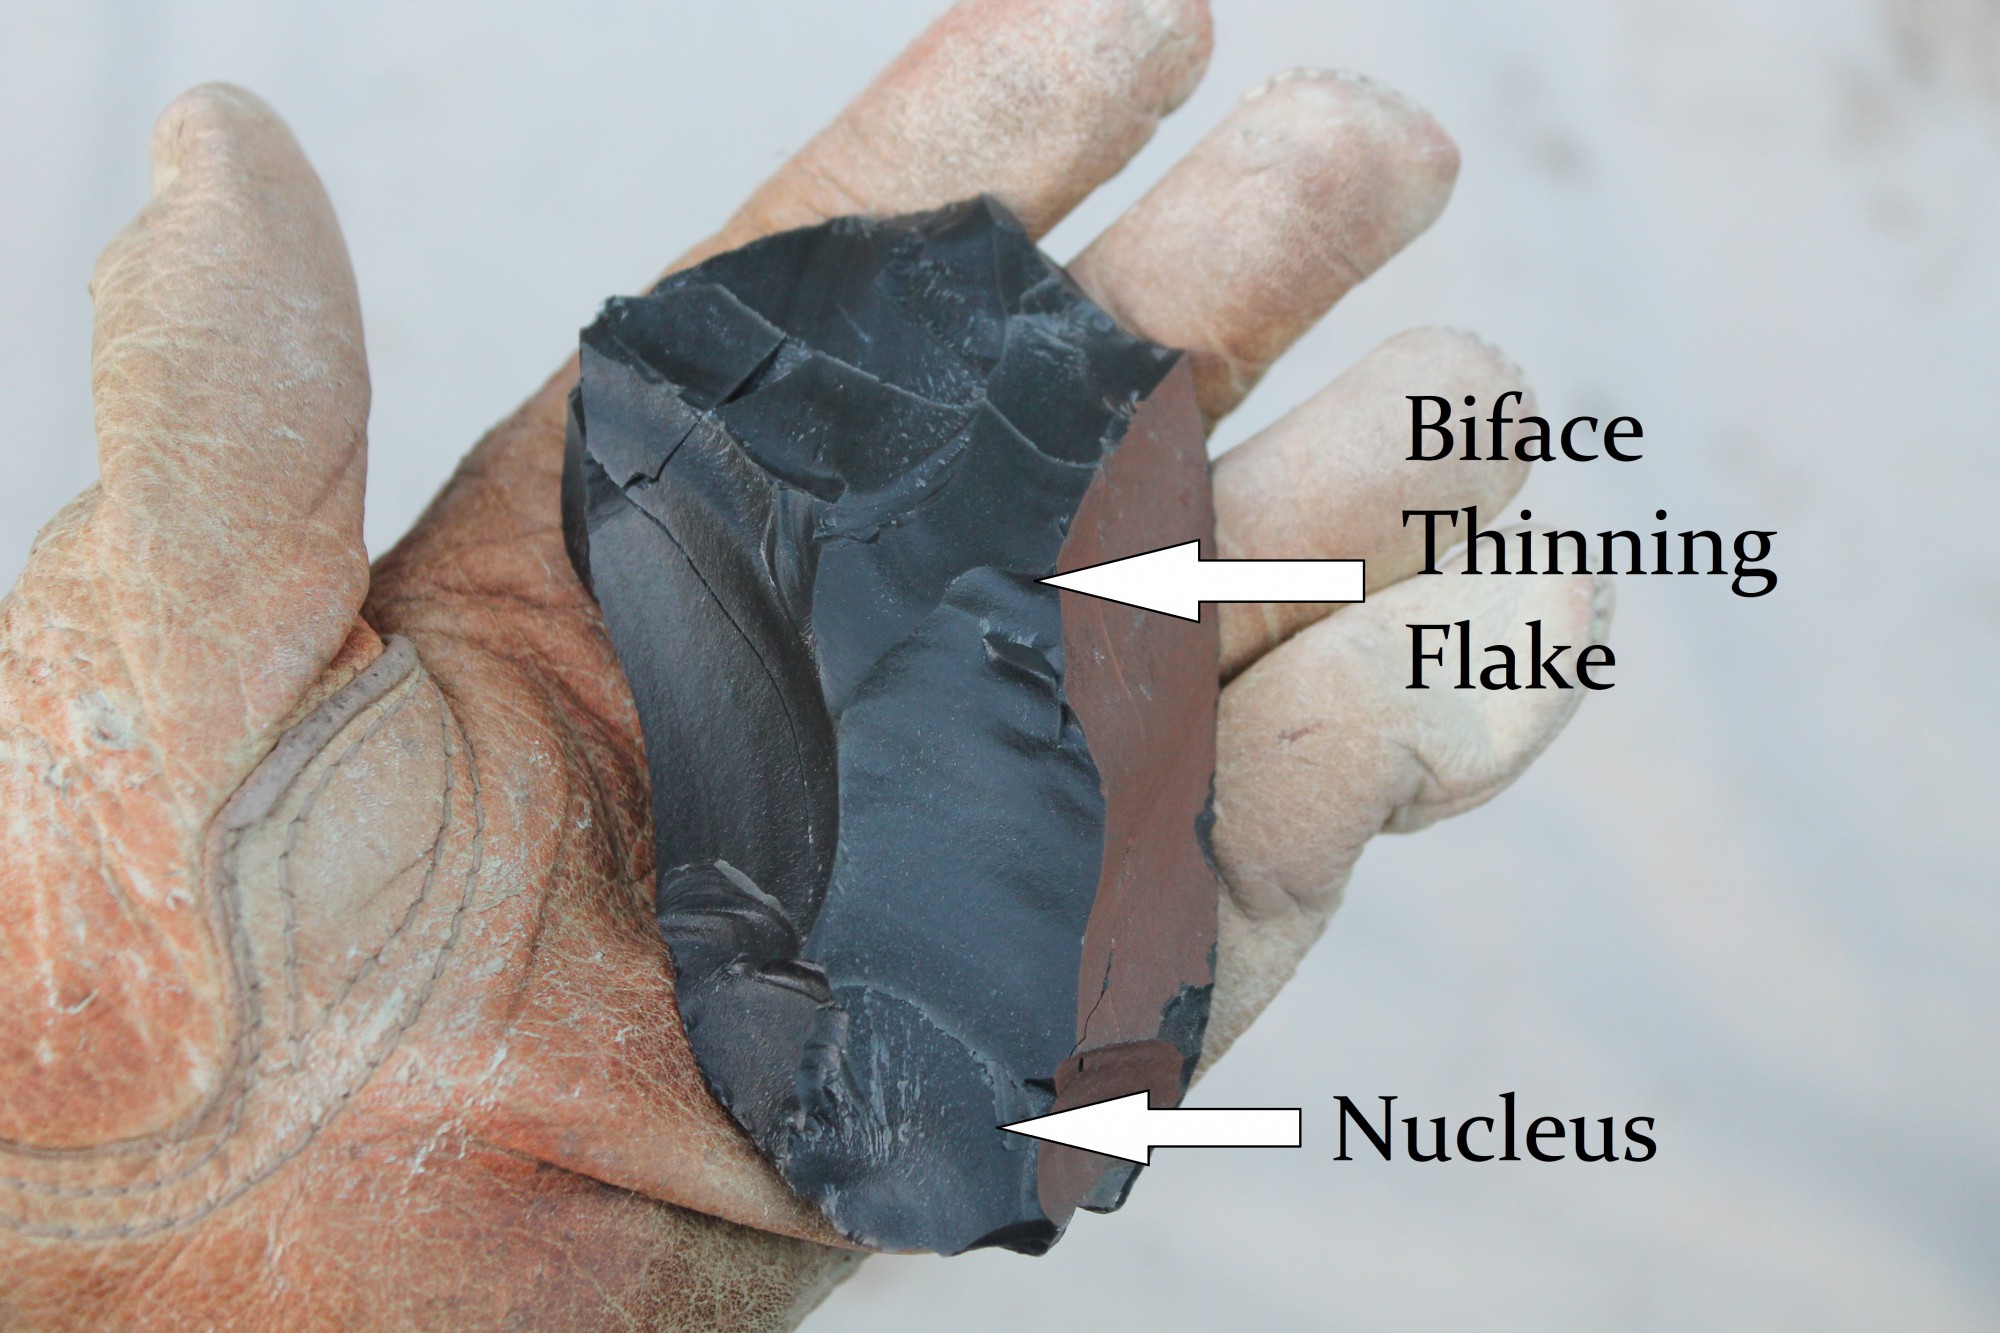 Biface thinning flake on nucleus